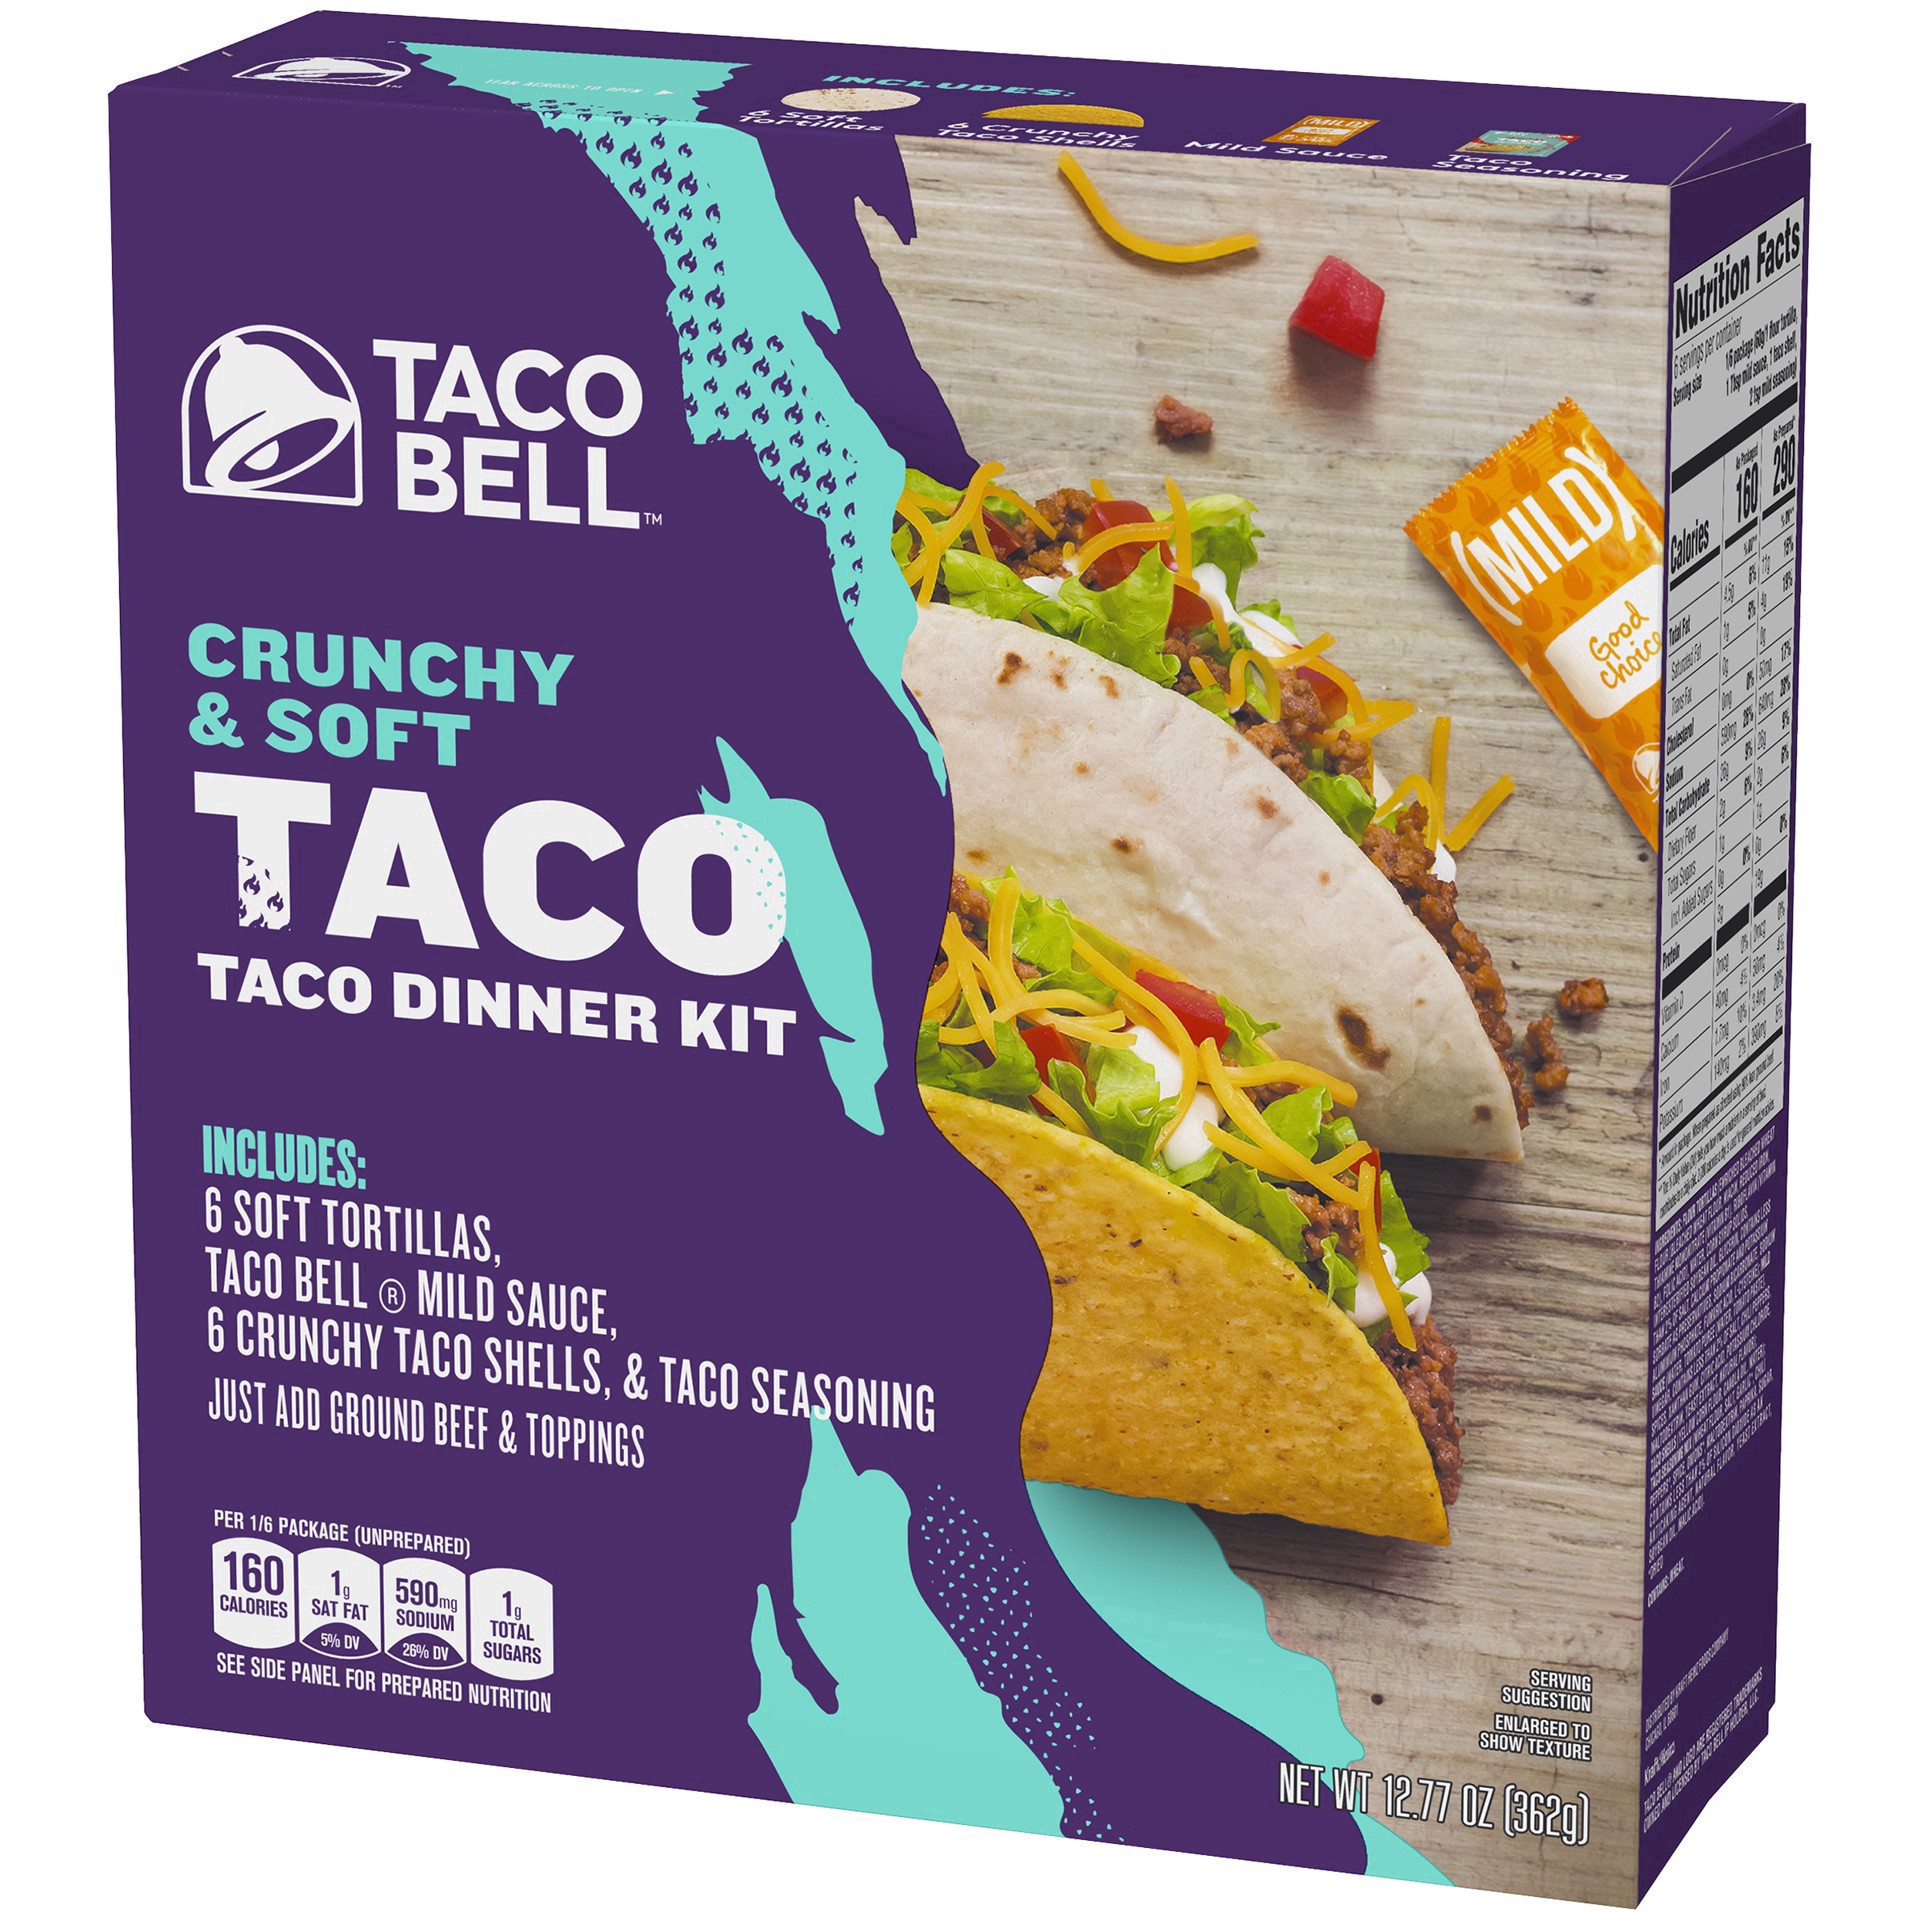 slide 92 of 101, Taco Bell Crunchy & Soft Taco Cravings Kit with 6 Soft Tortillas, 6 Crunchy Taco Shells, Taco Bell Mild Sauce & Seasoning, 12.77 oz Box, 1 ct